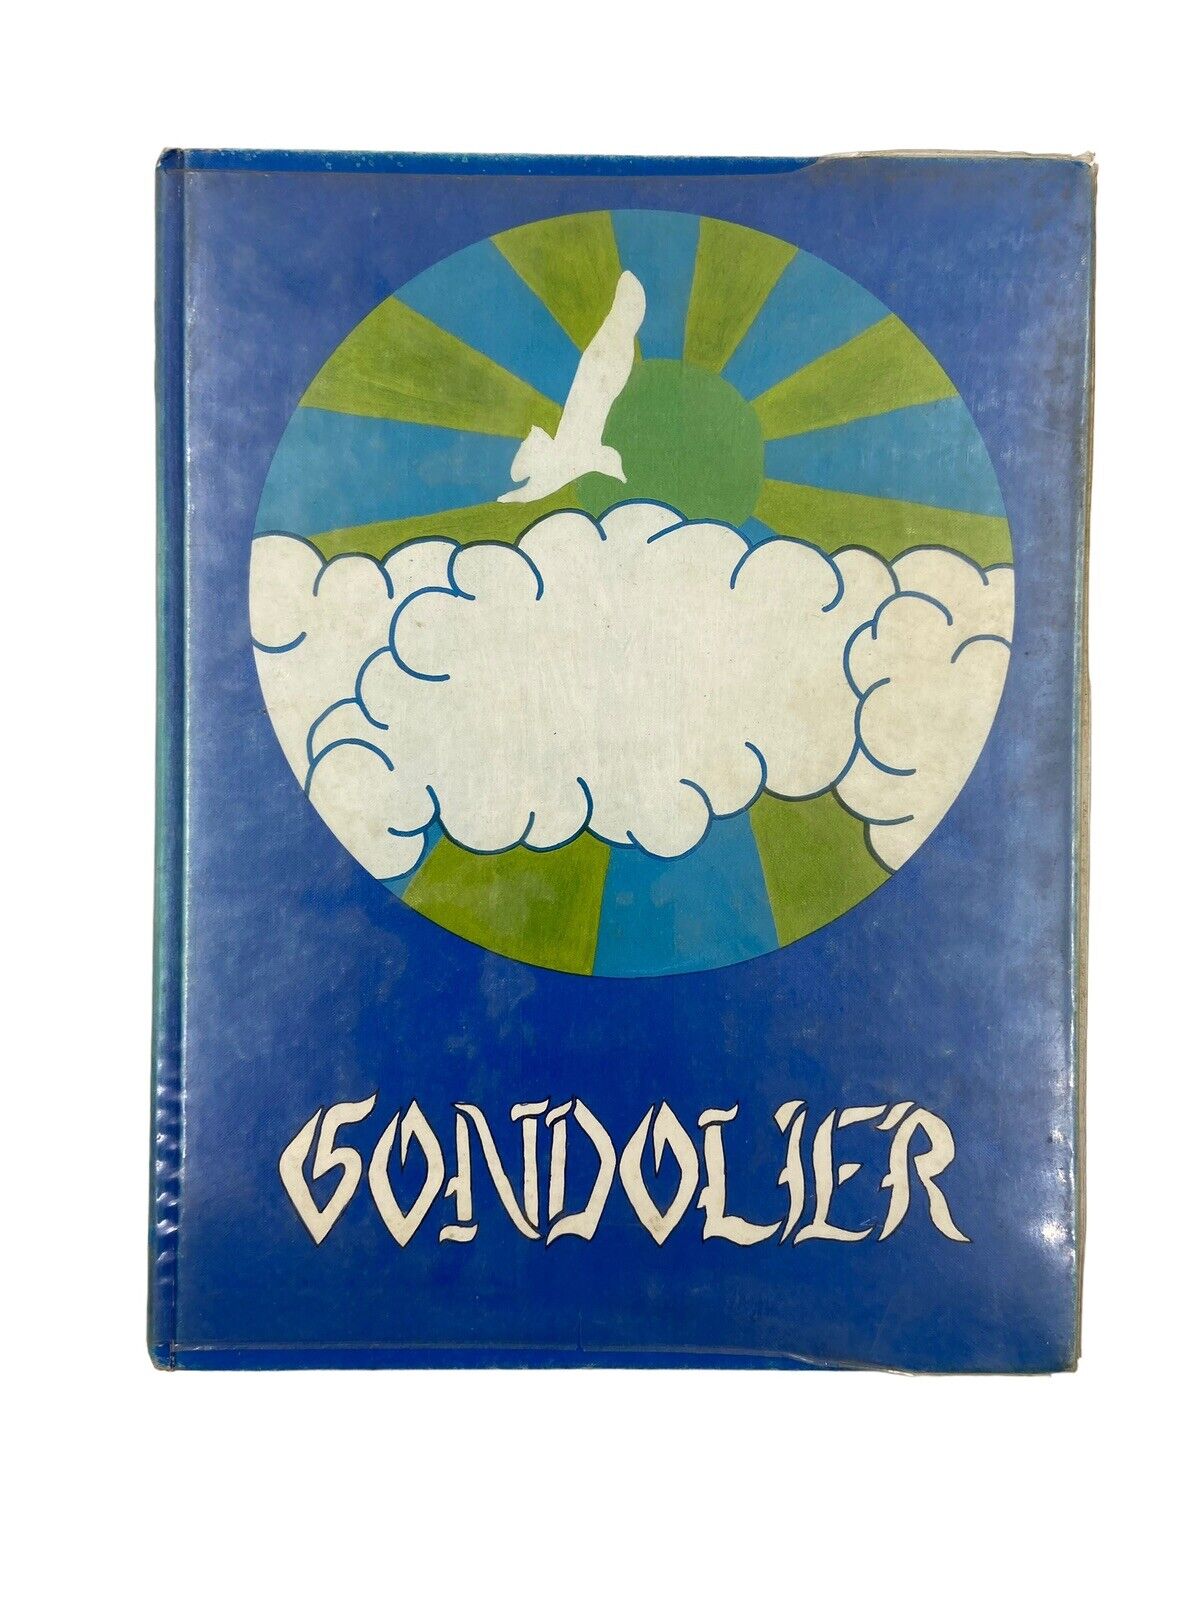 1981 Venice High School Yearbook Gondolier Bridges Crispin Glover